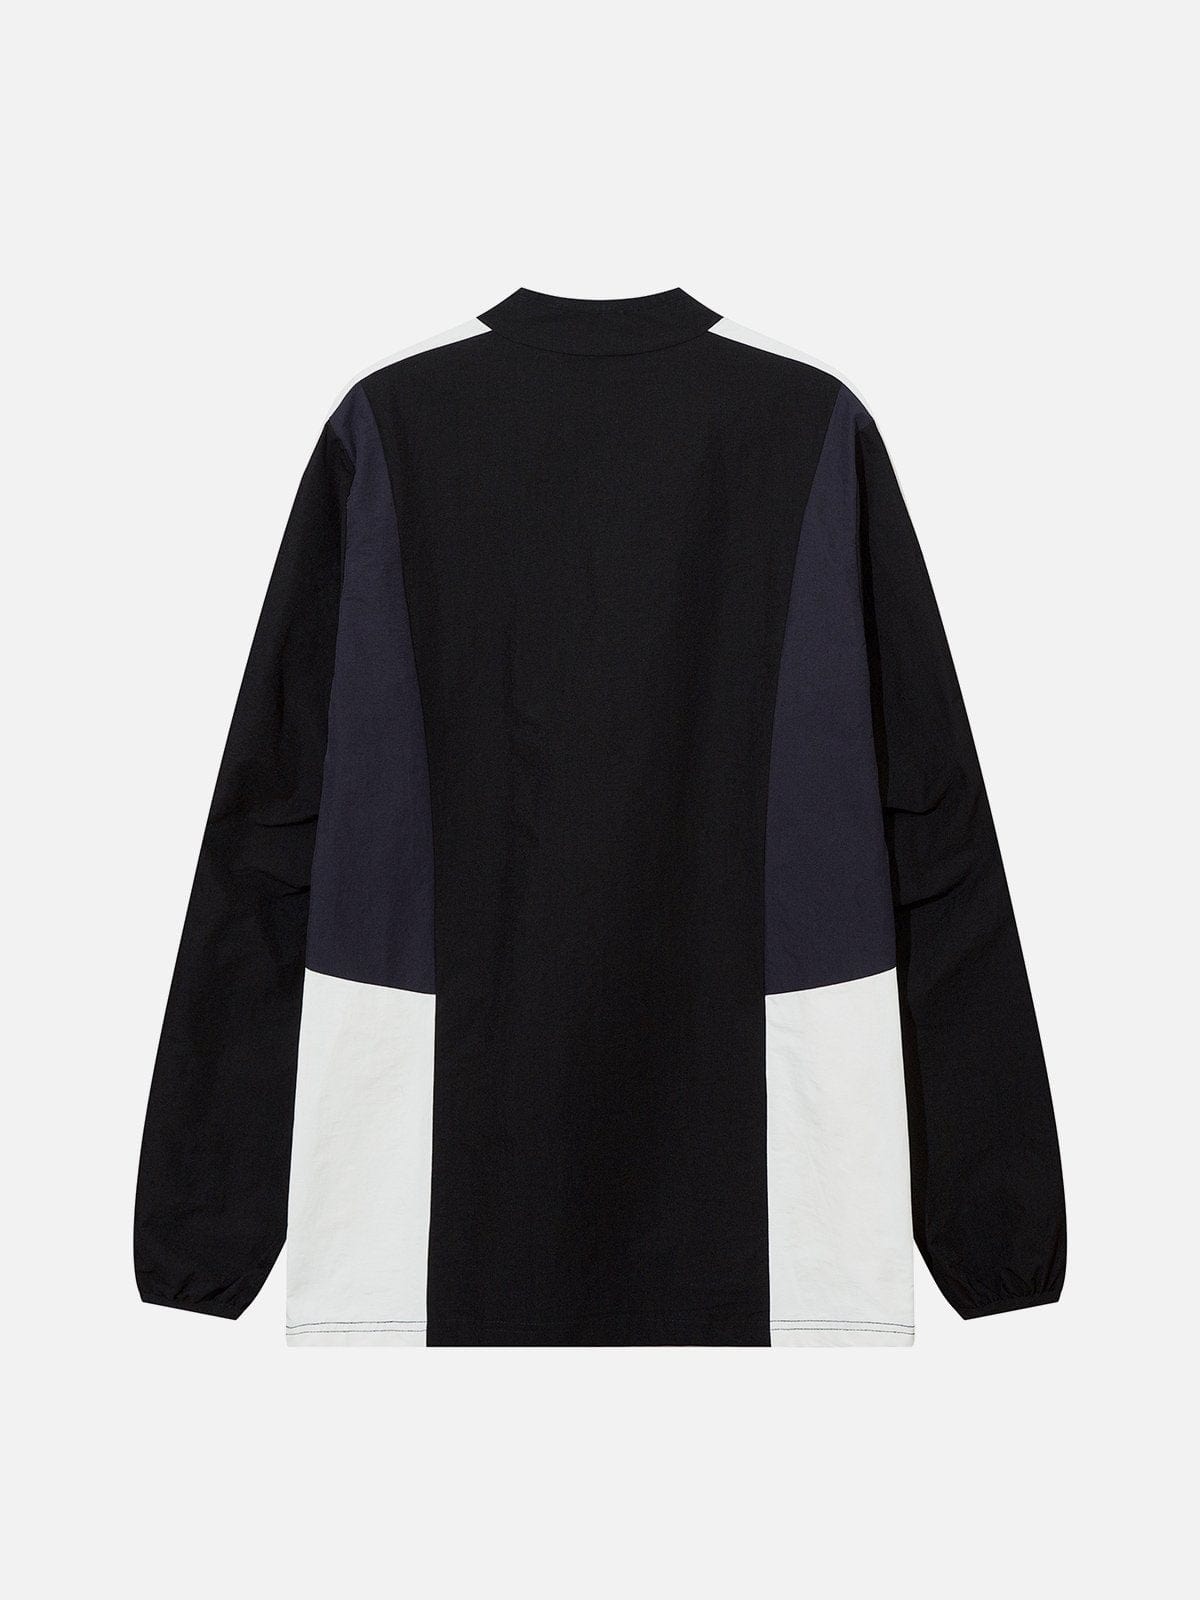 NEV Material Splicing Contrasting Colors Sweatshirt